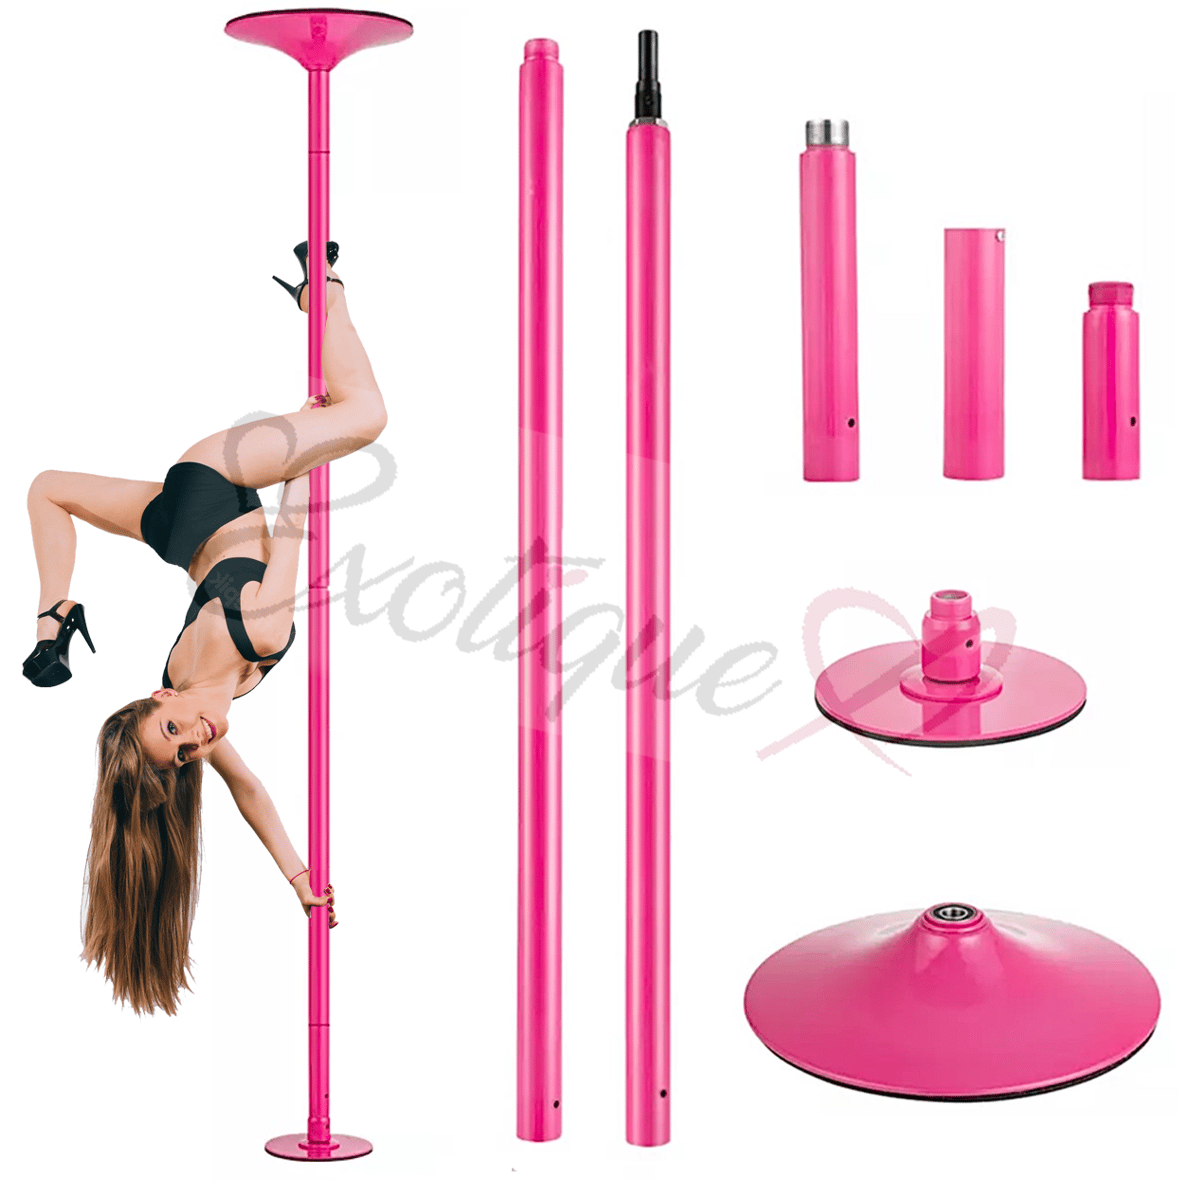 Barra de Pole Dance Pink Silicone Giratória, Removível e Desmontável, barra  pole dance